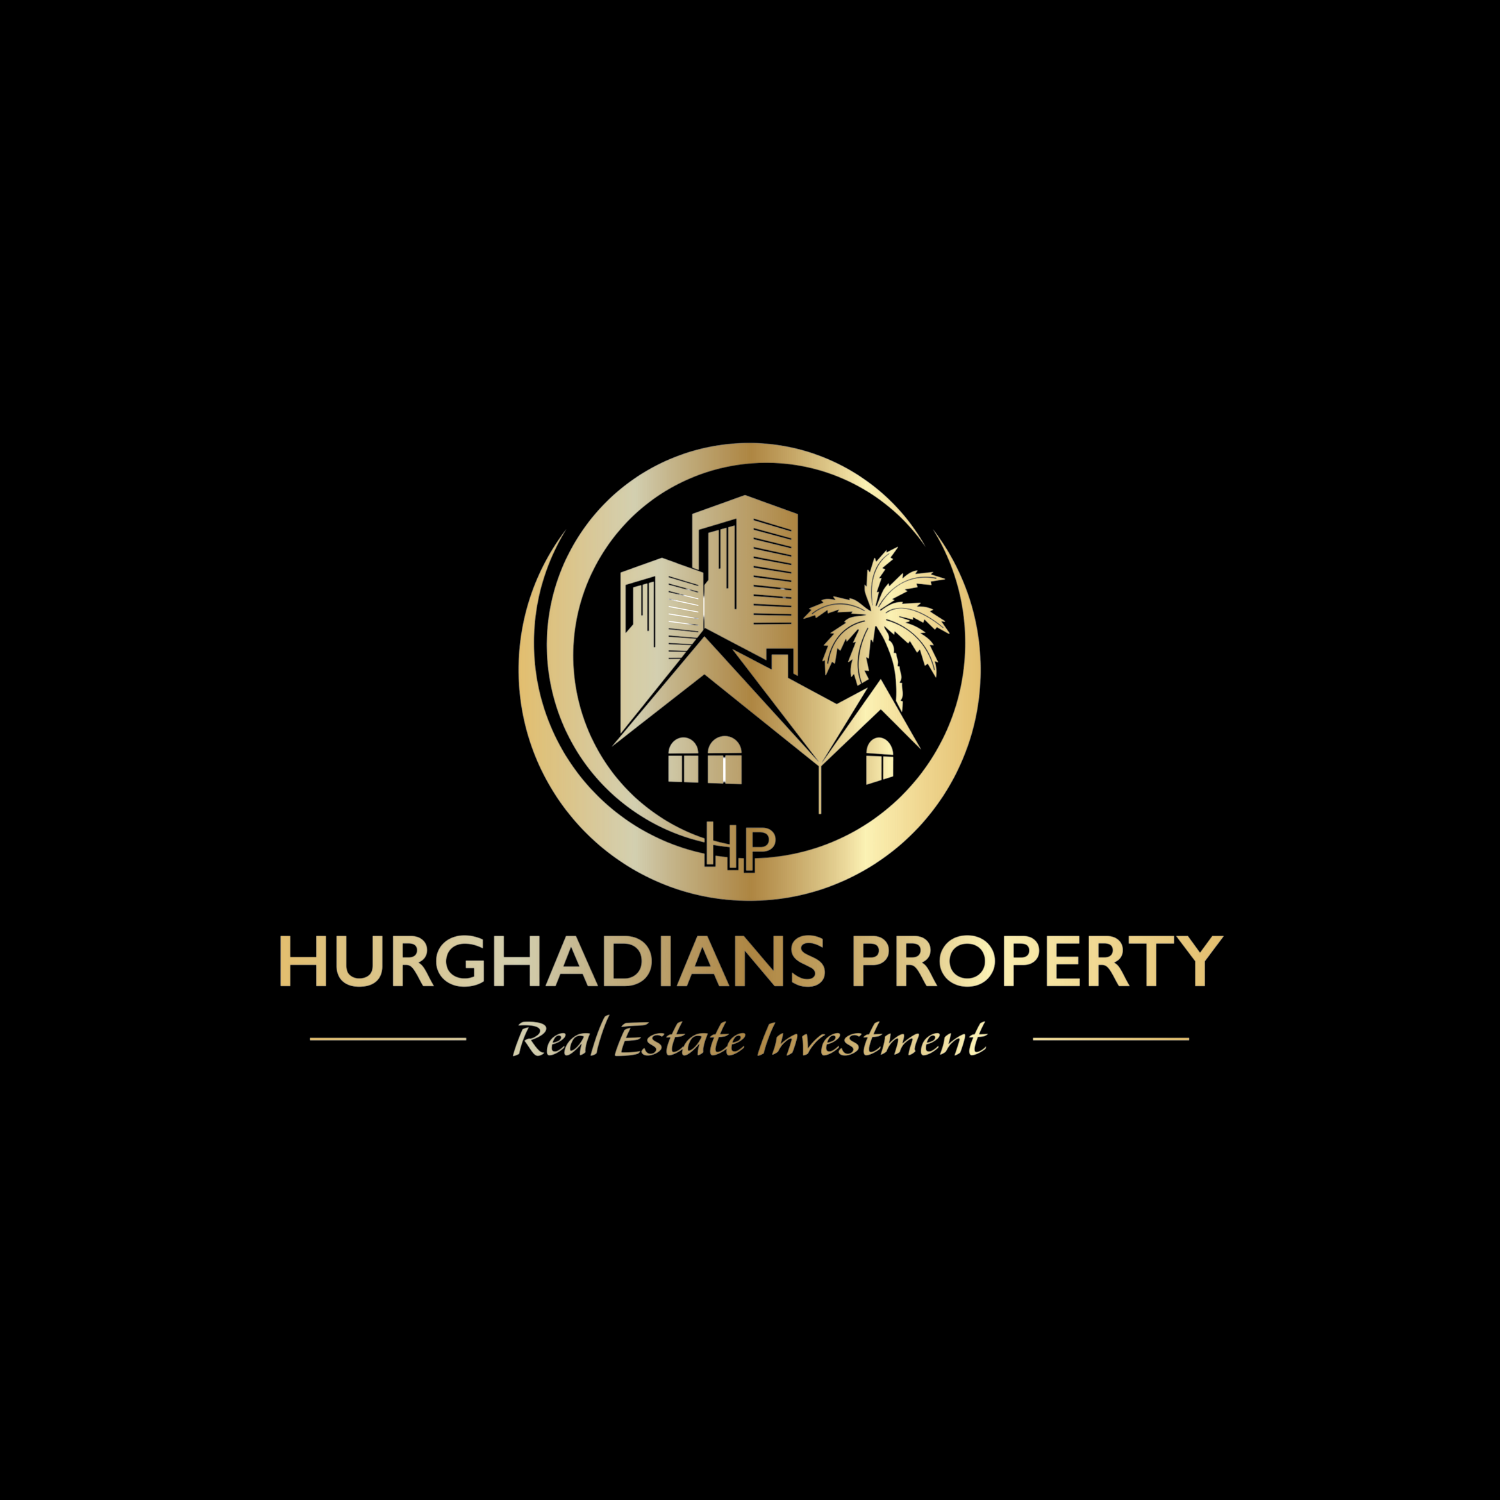 hurghadians property